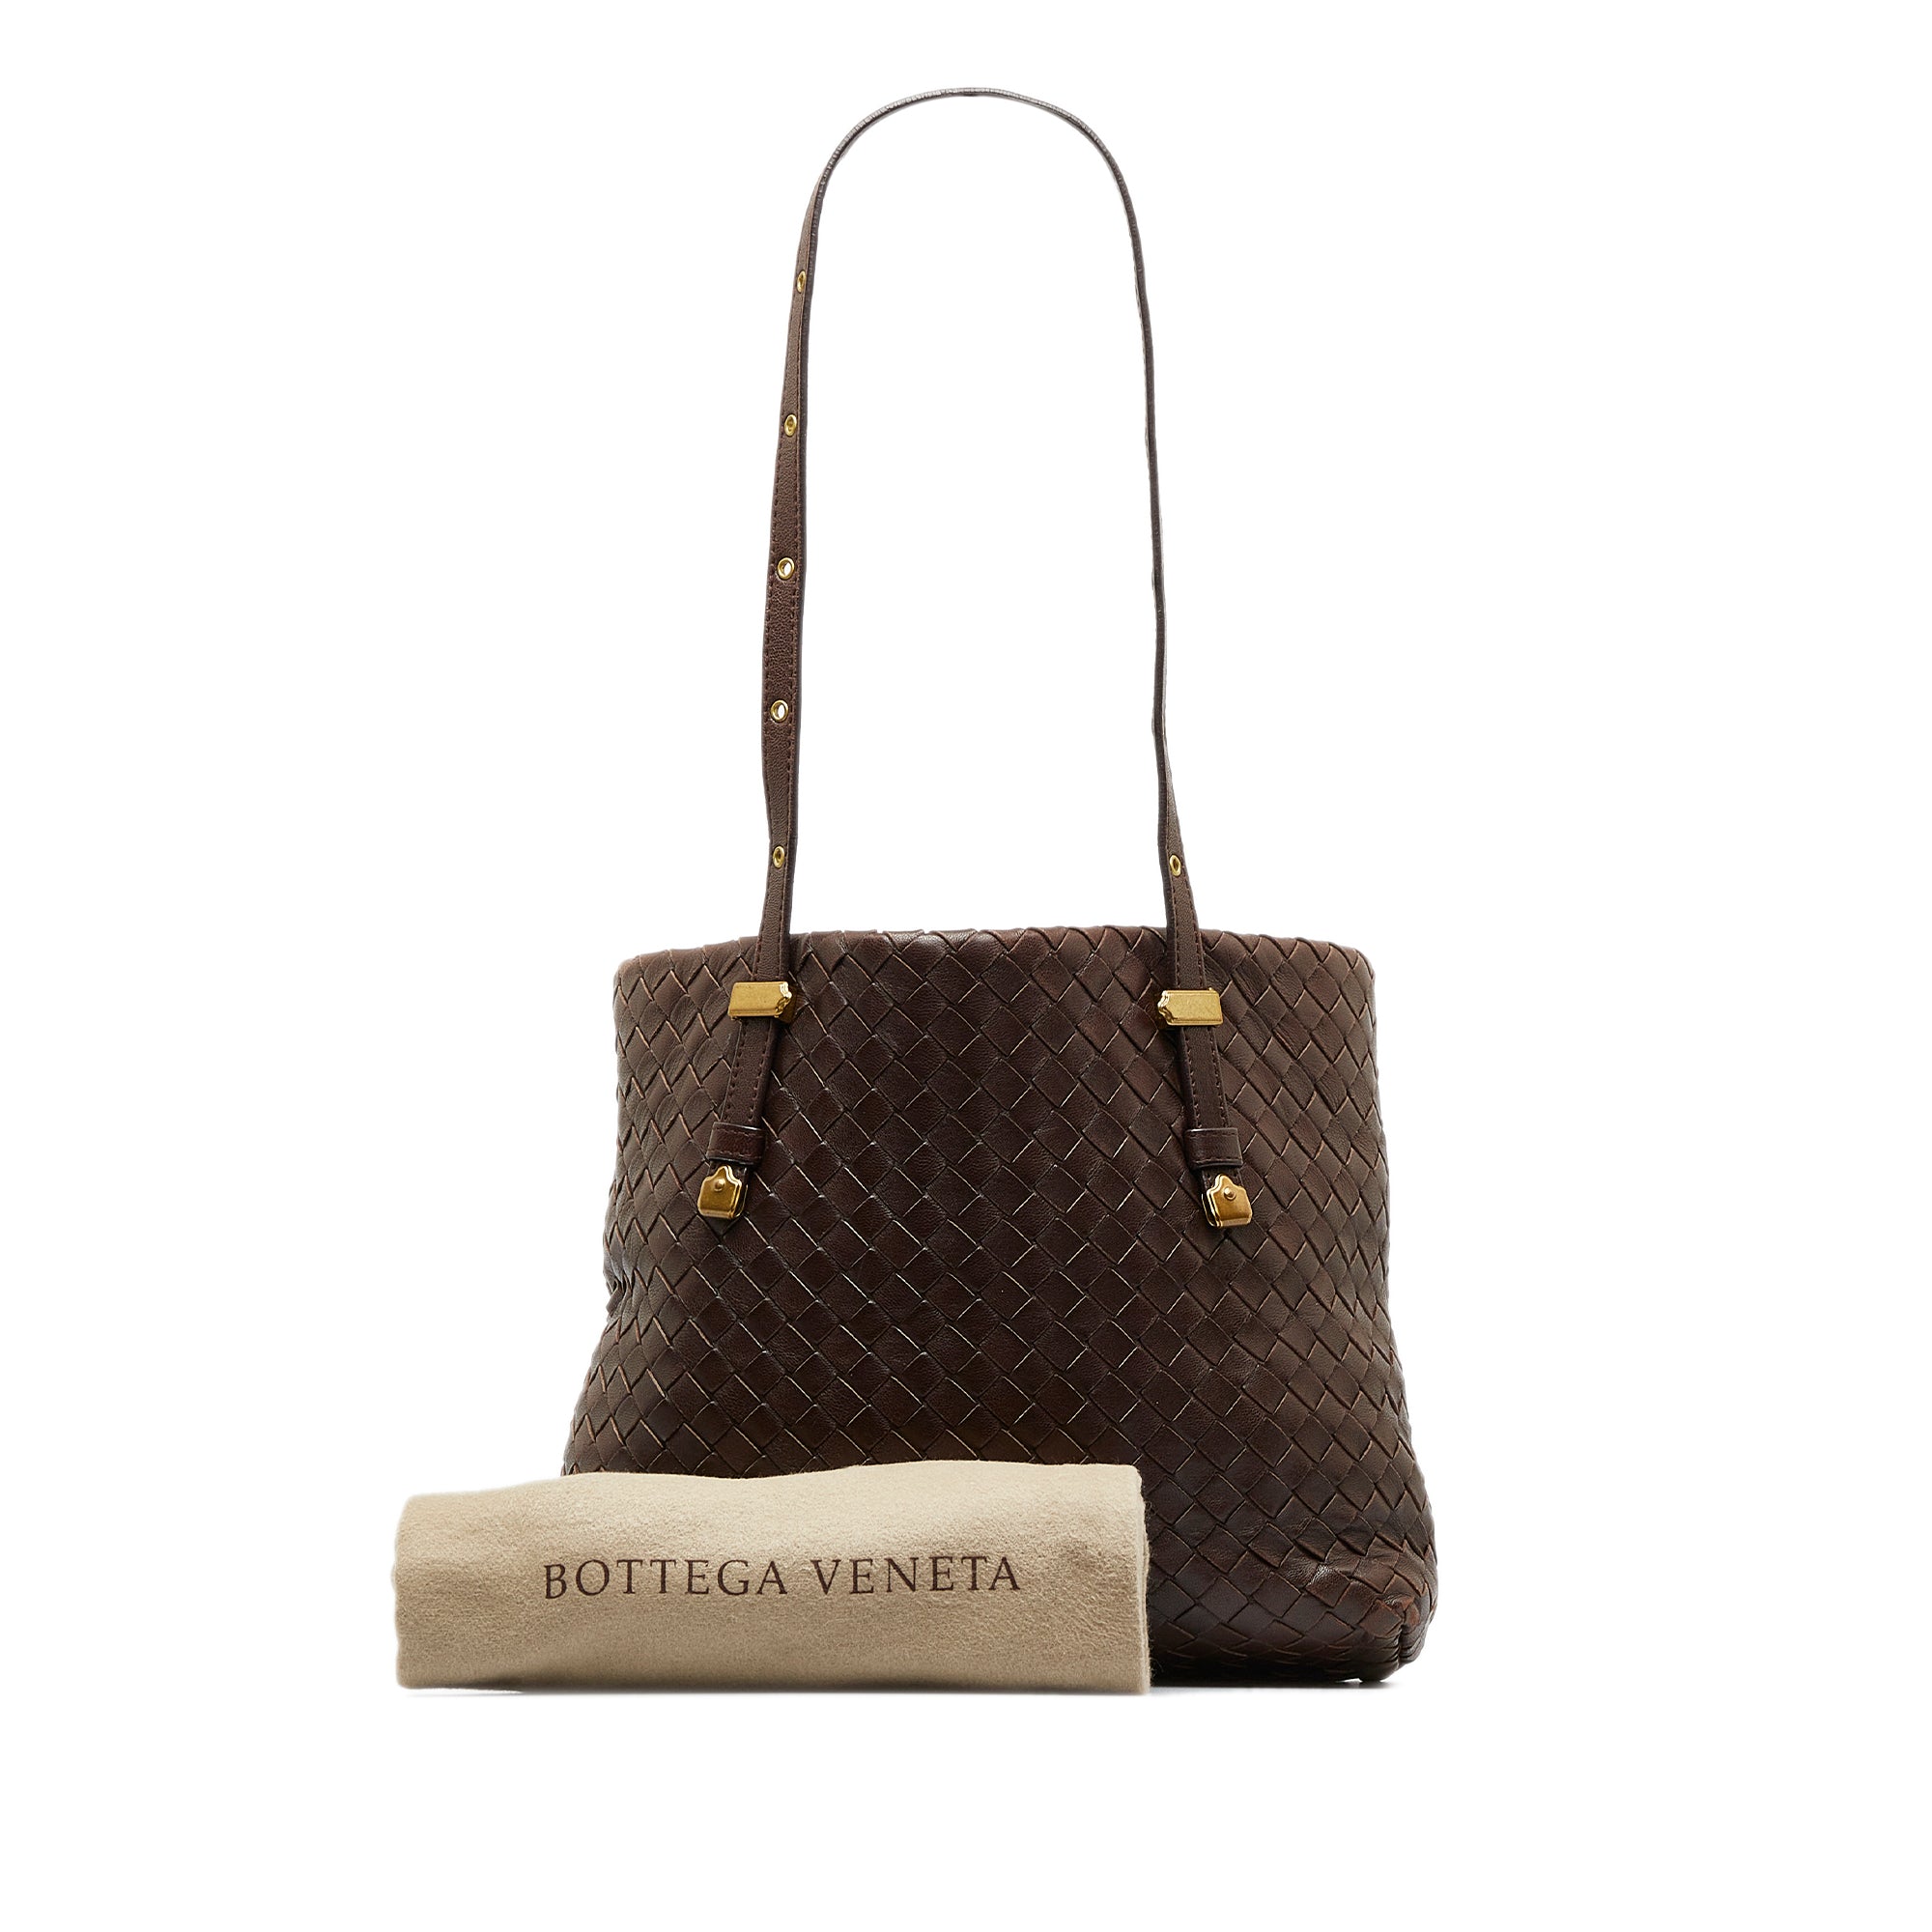 Embossed intrecciato leather messenger bag